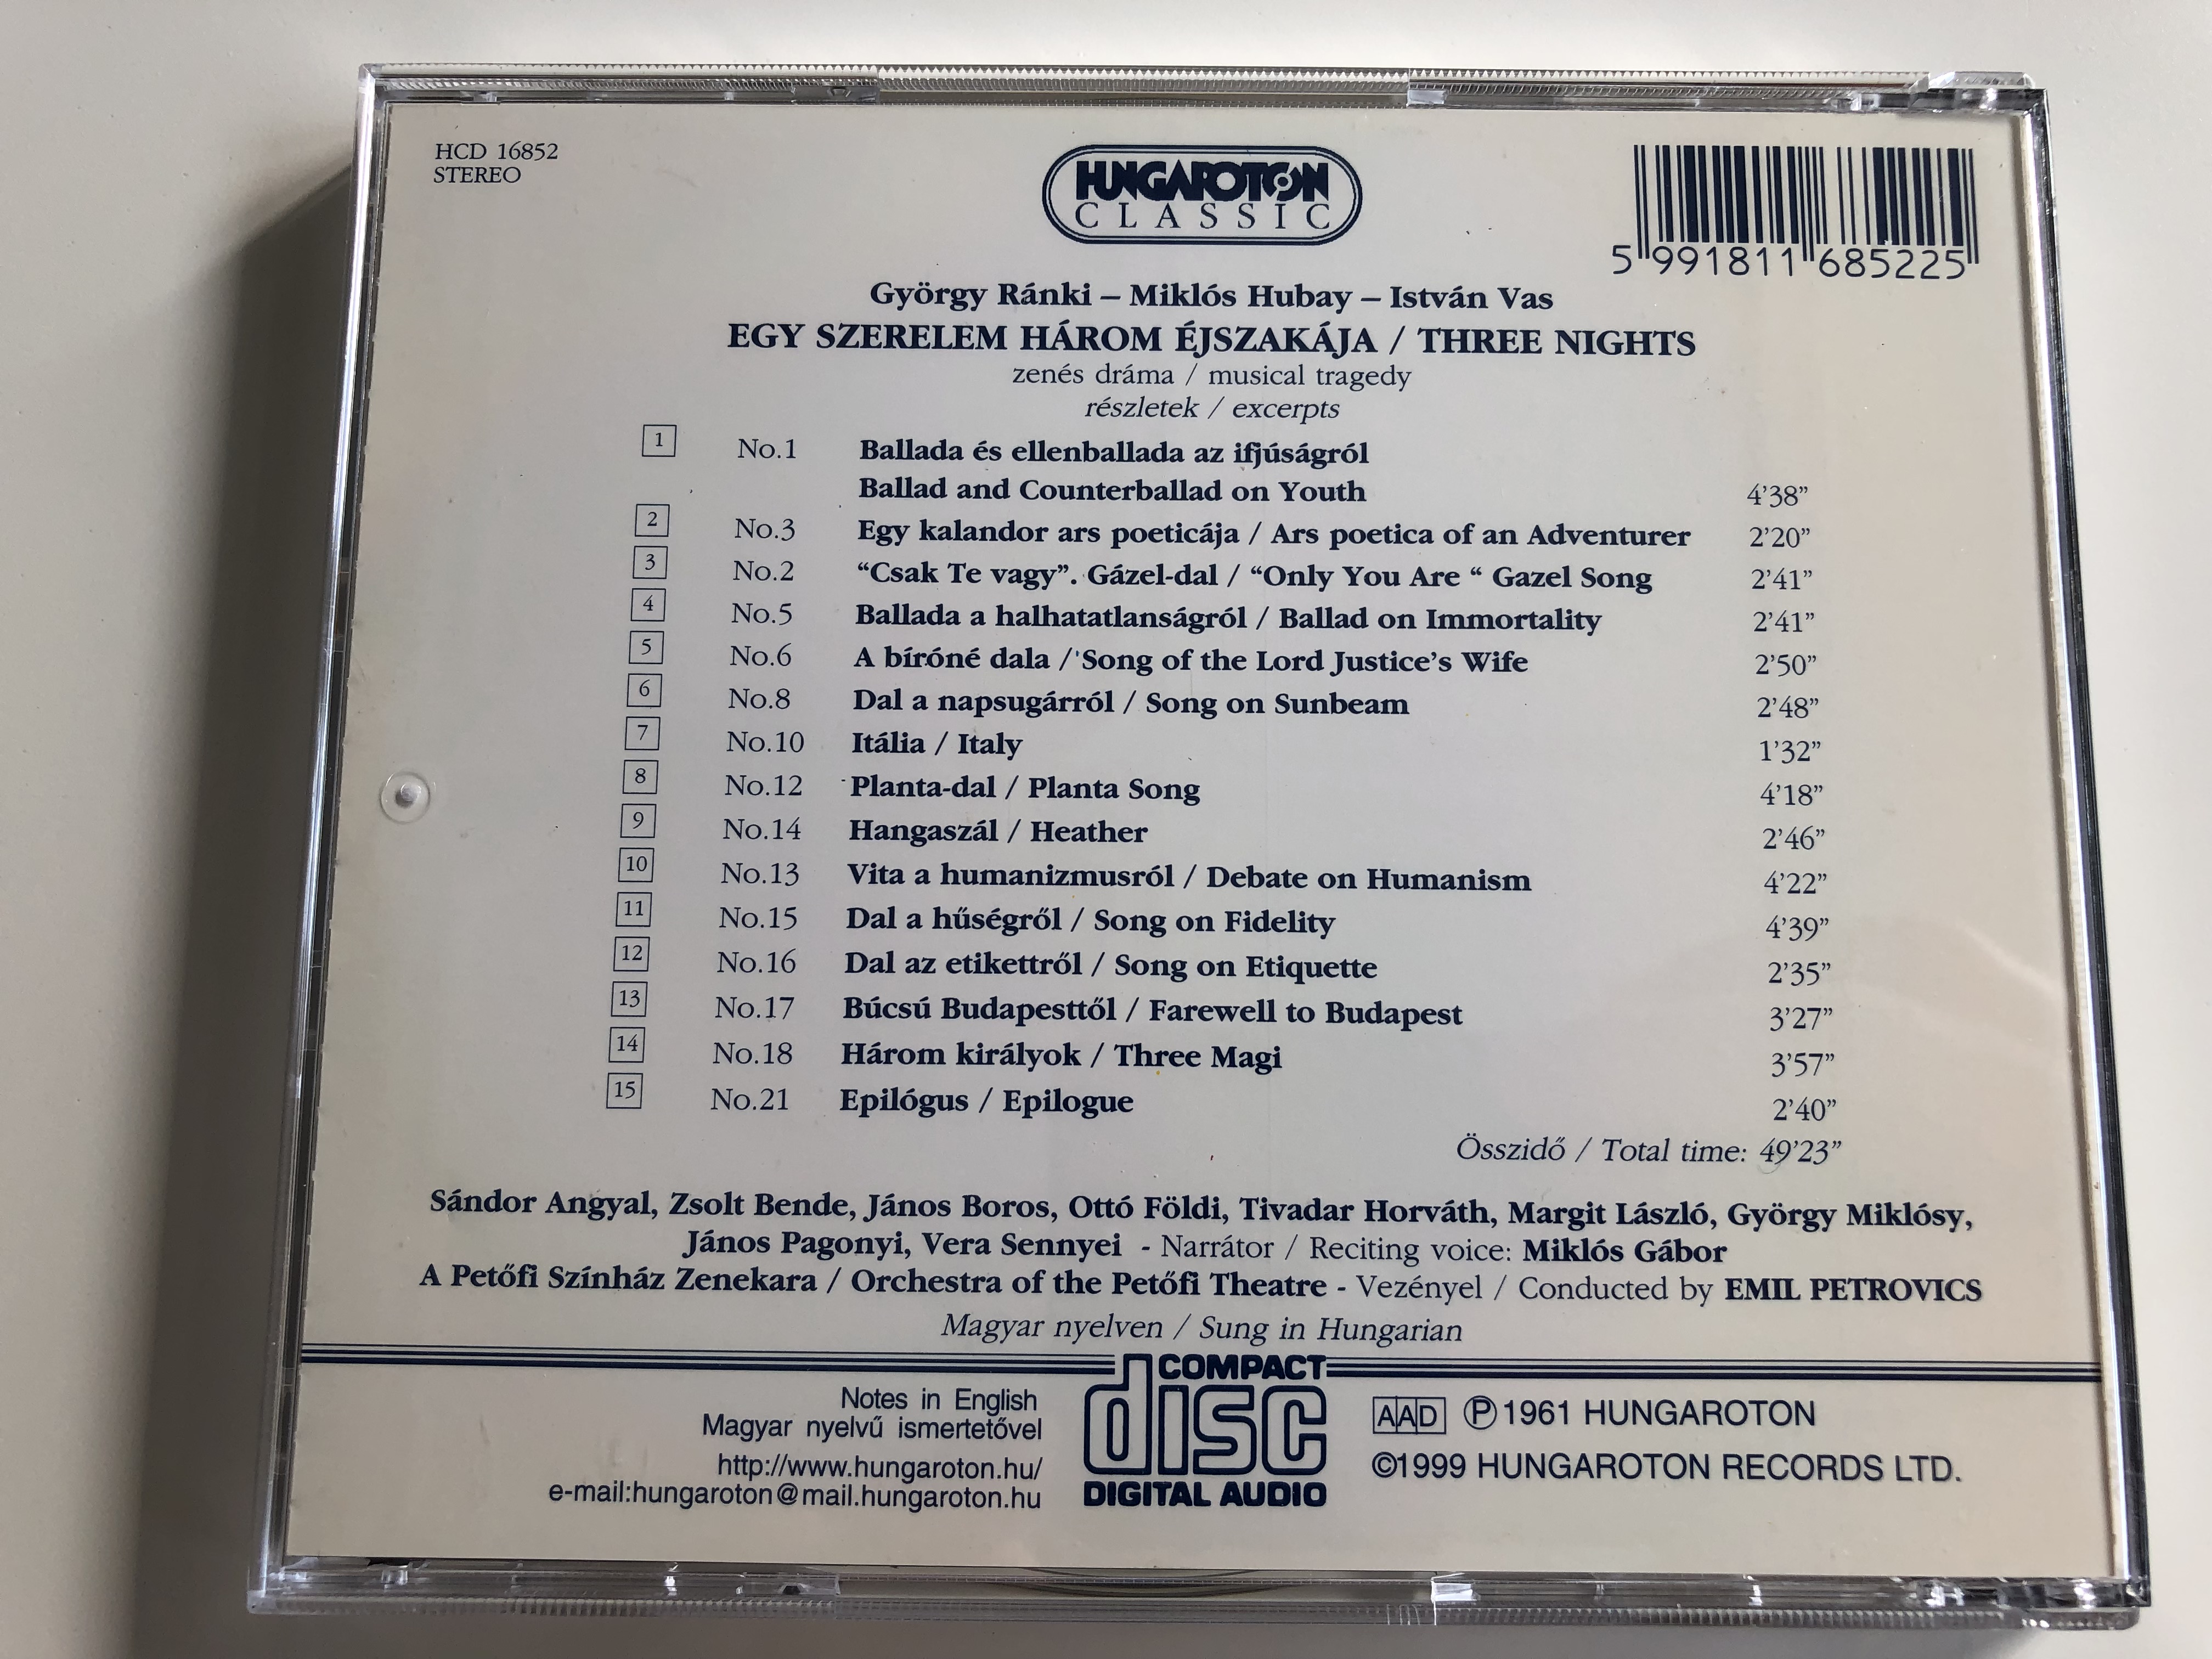 r-nki-hubay-vas-egy-szerelem-h-rom-jszak-ja-three-nights-musical-tragedy-excerpts-hungaroton-classic-audio-cd-1999-hcd-16852-6-.jpg